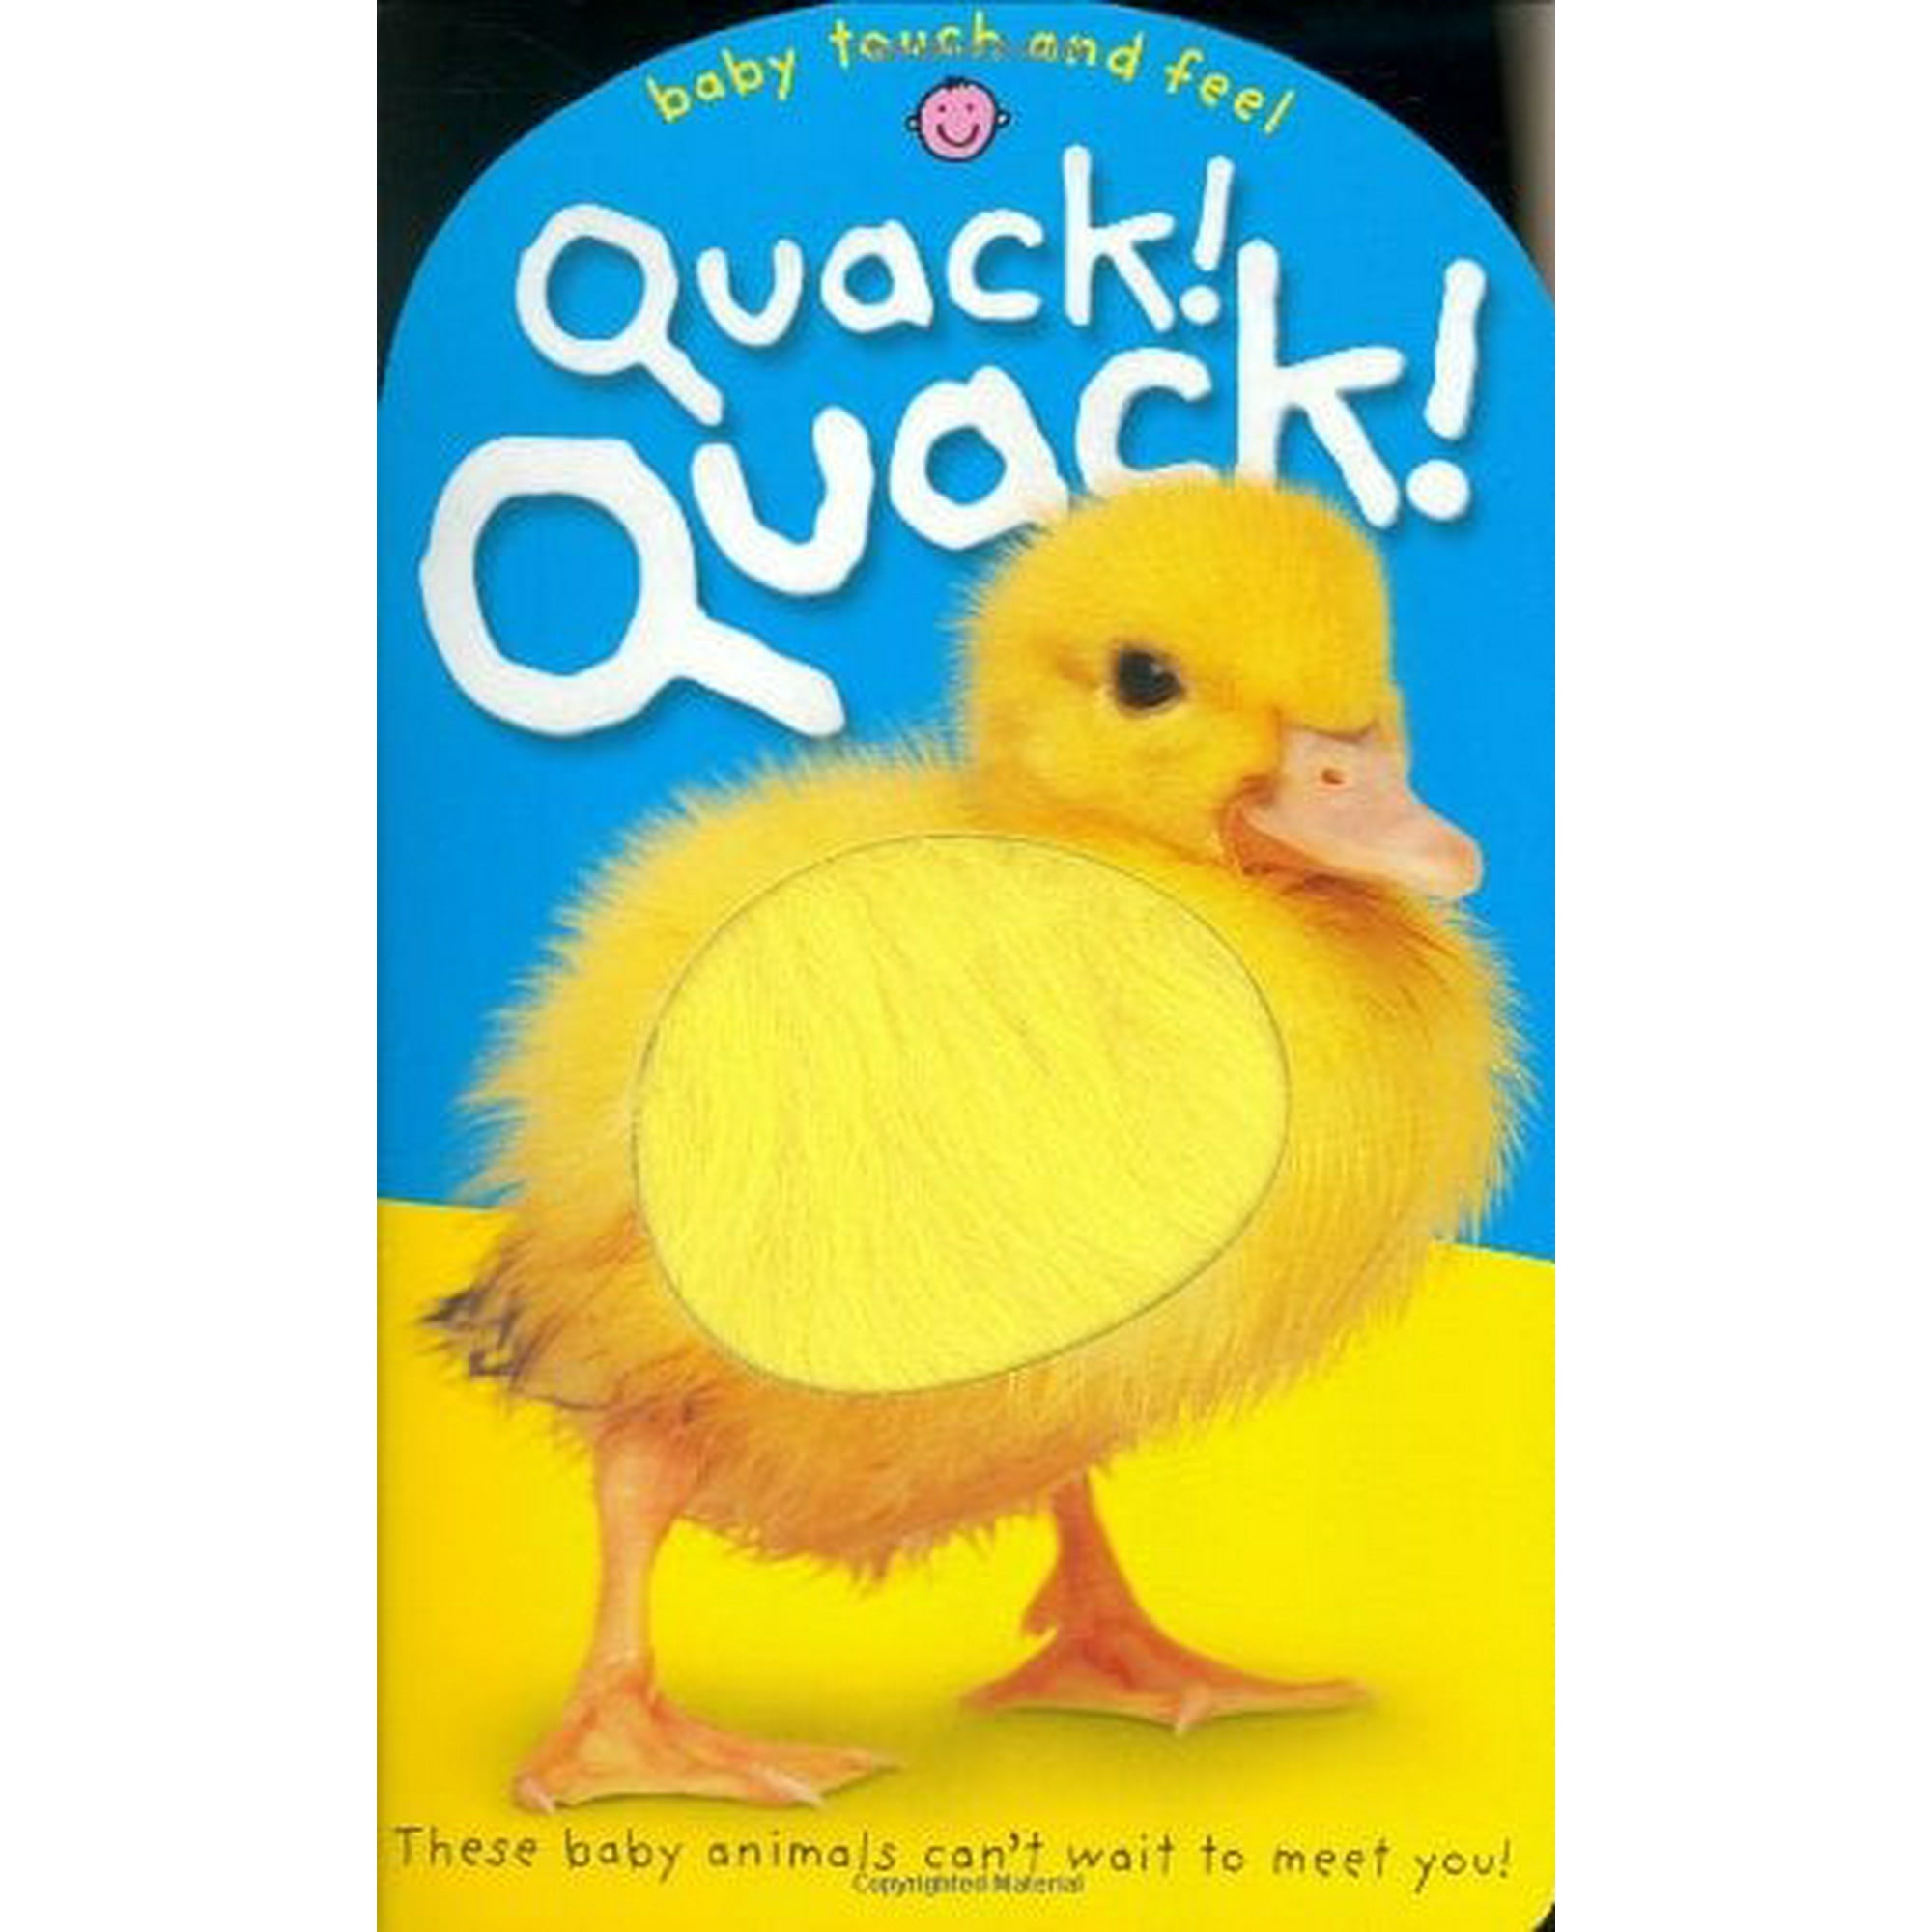 Is quack quack real?